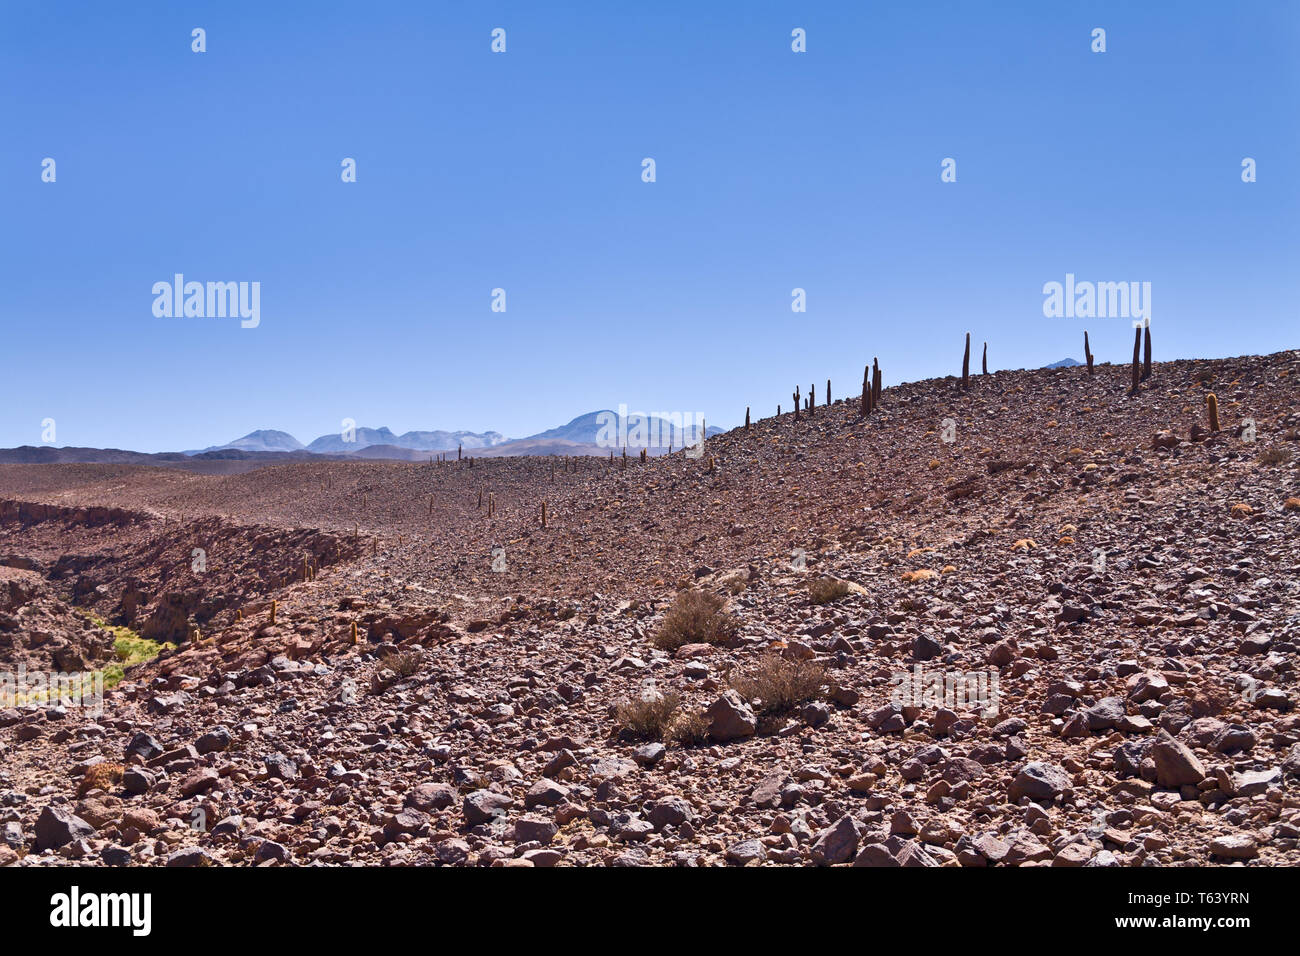 Cardon cactii auf die Skyline, Atacama, San Pedro de Atacama, Chile. Stockfoto